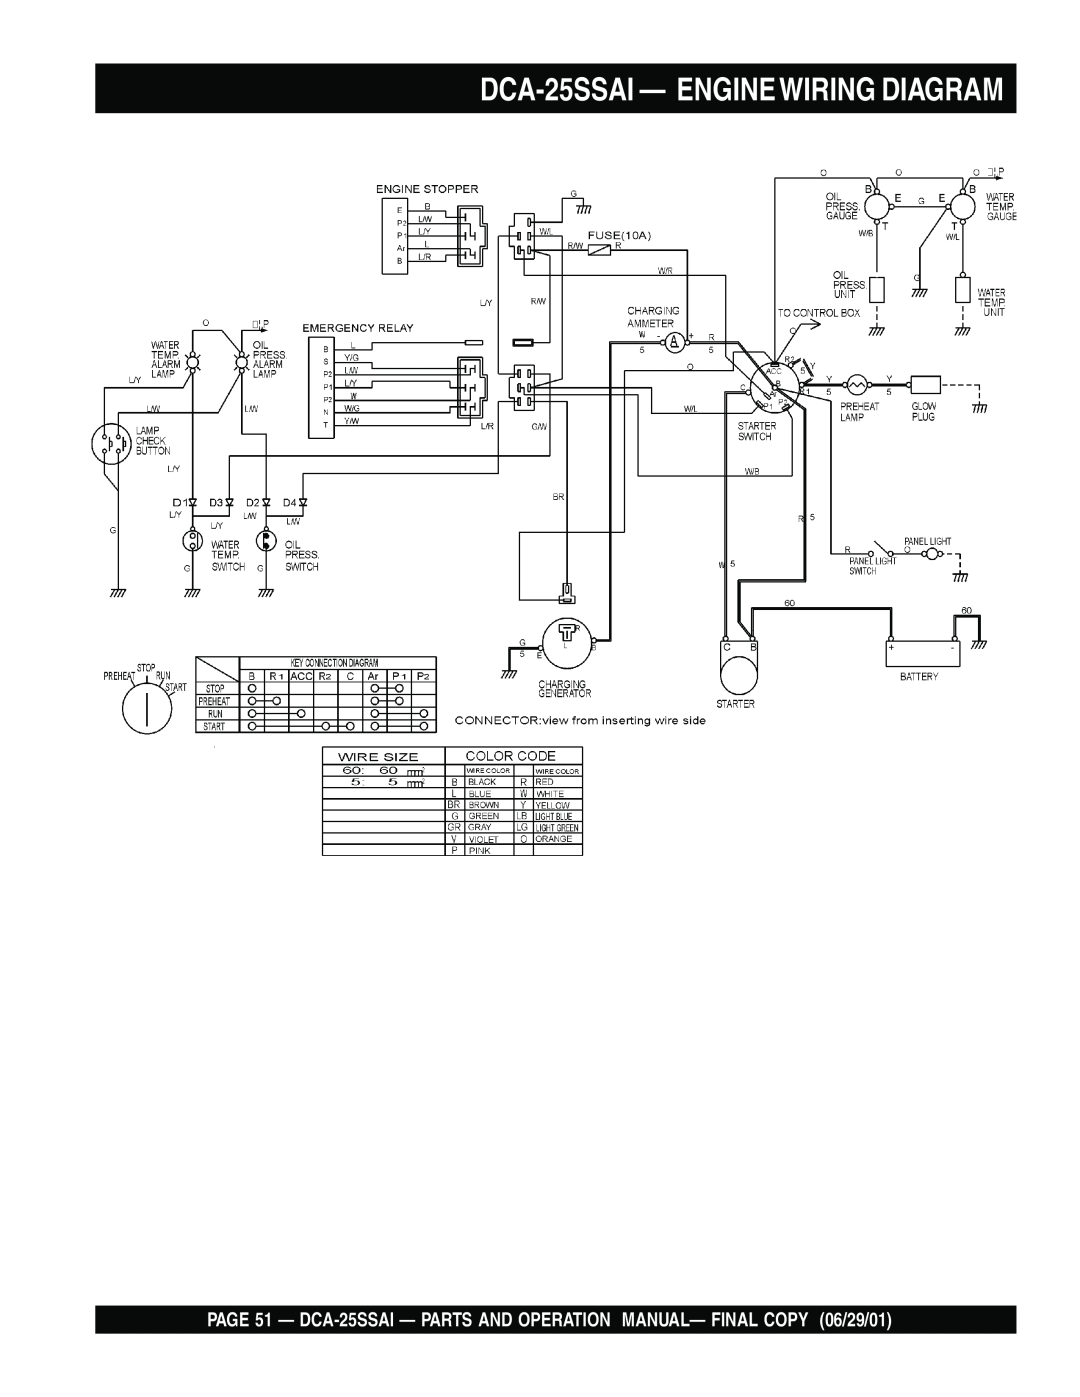 Multiquip operation manual DCA-25SSAI - ENGINEWIRING DIAGRAM 